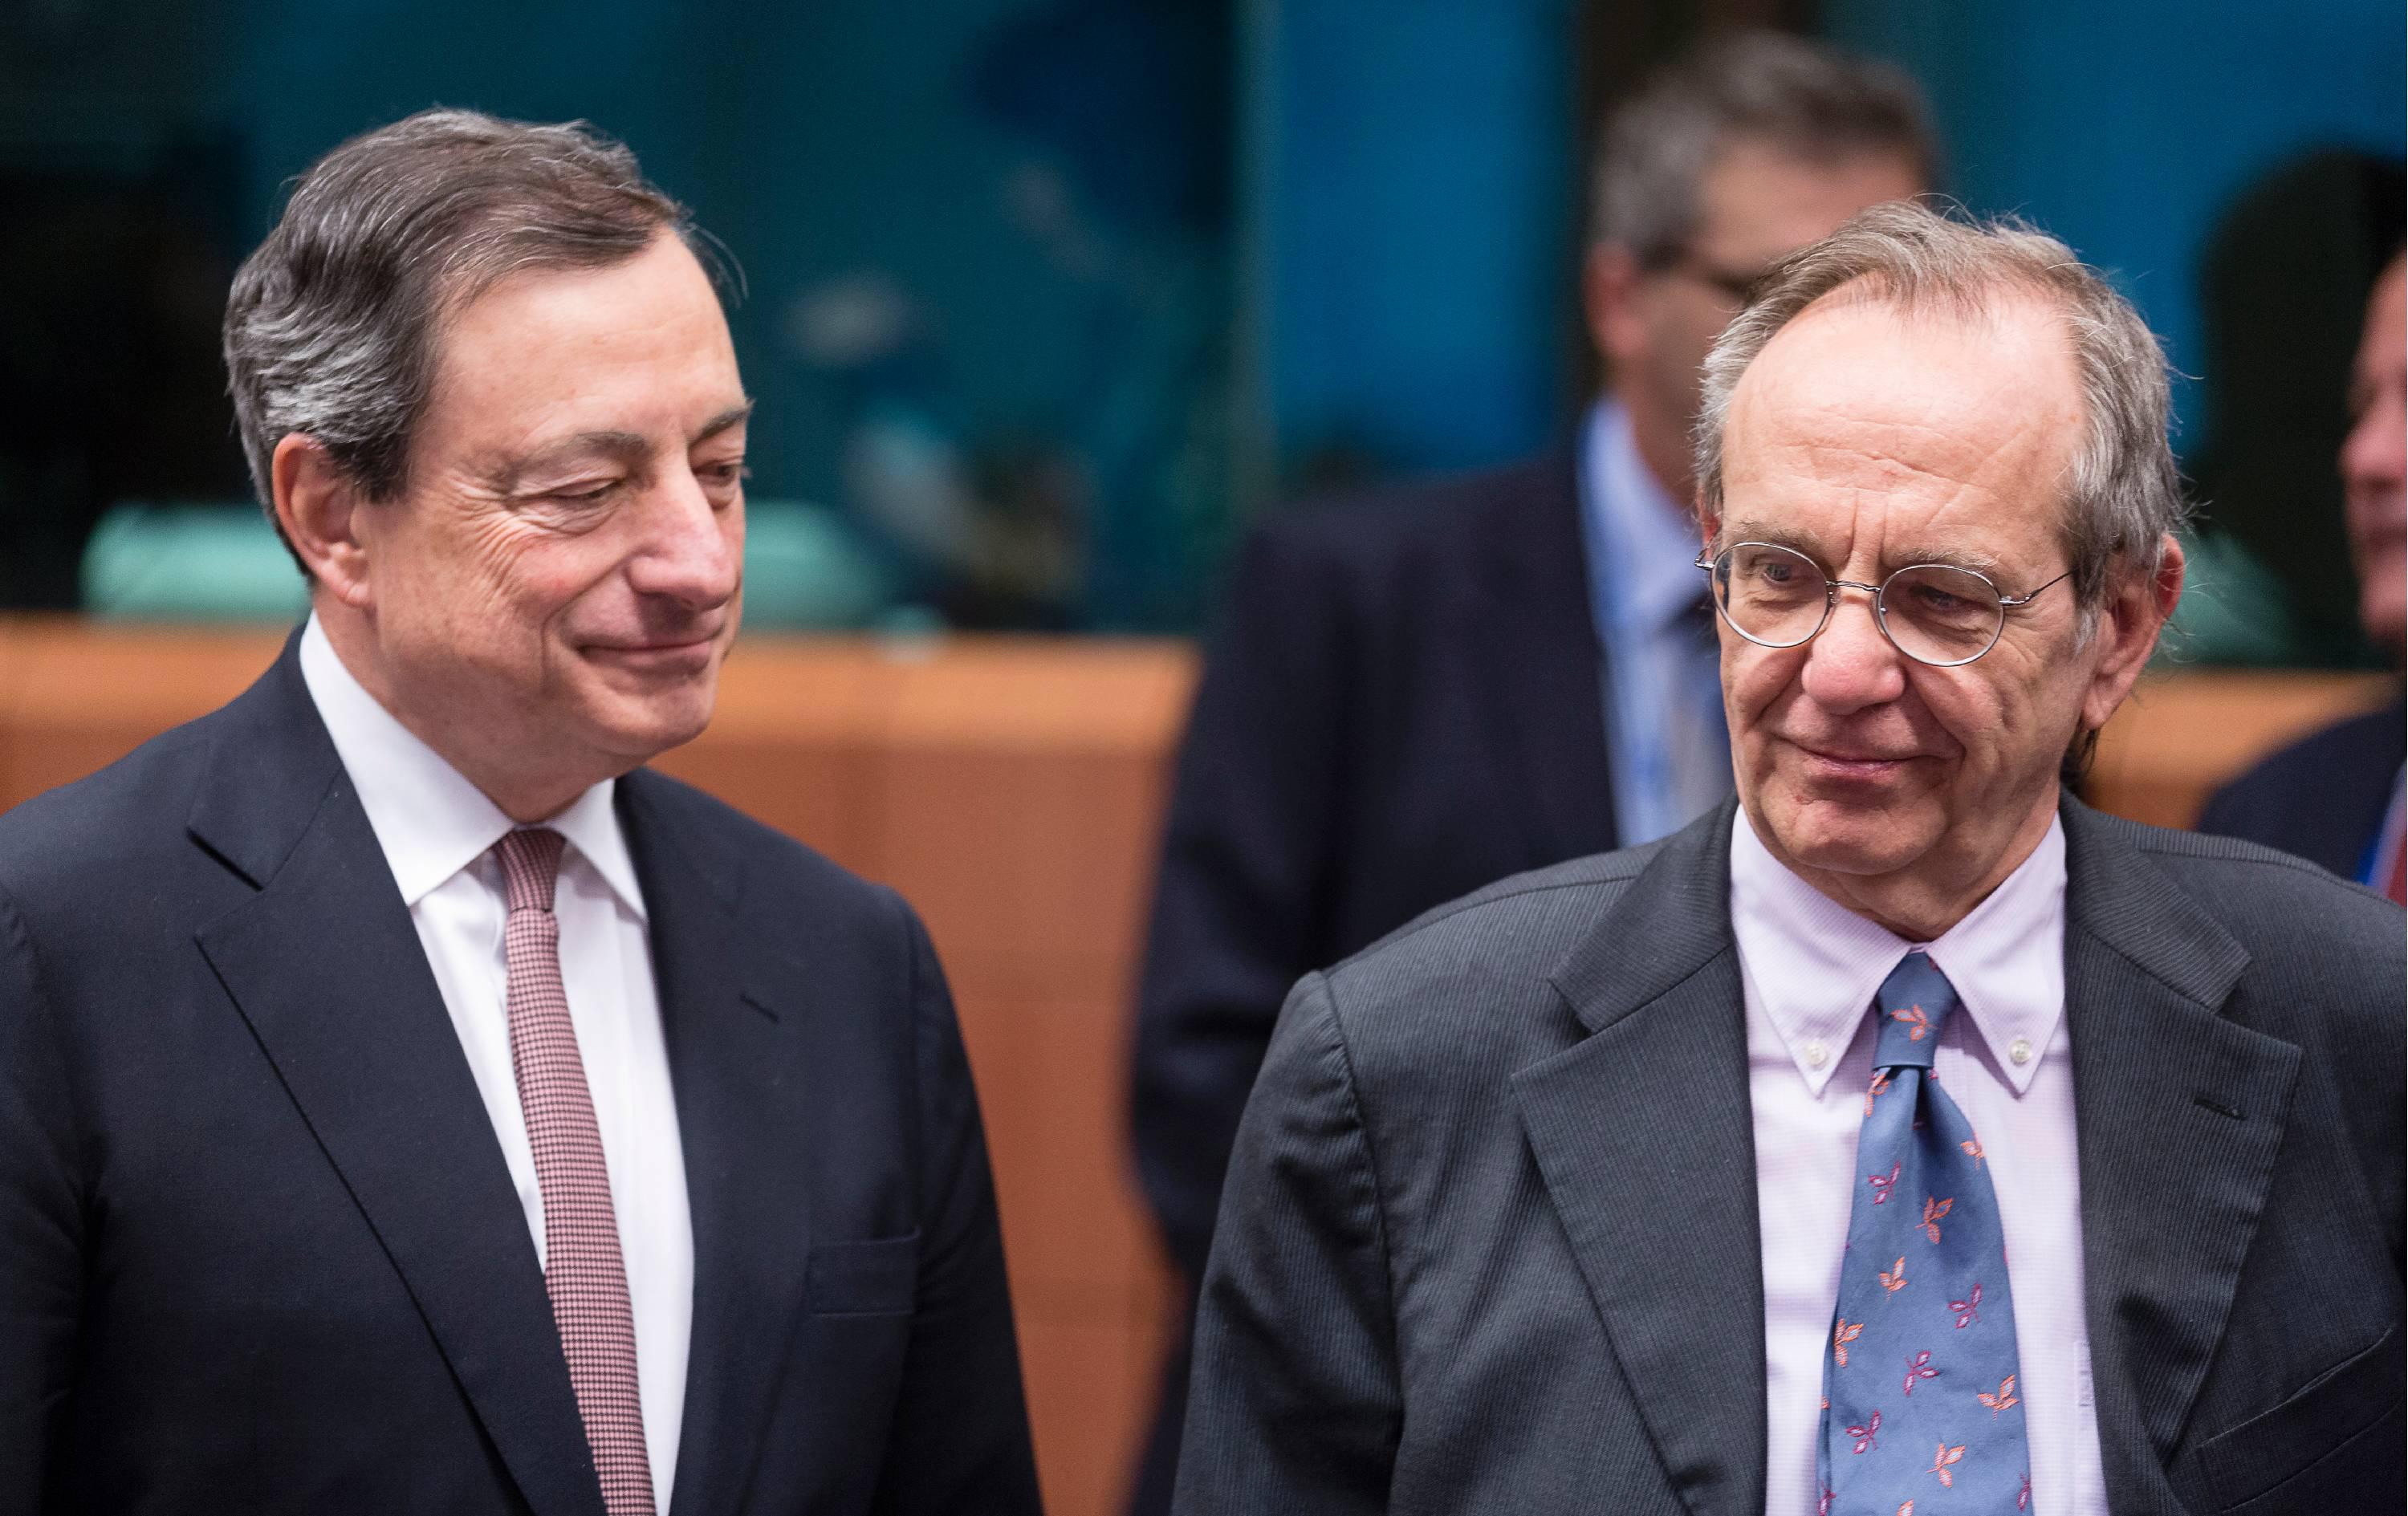  Mario Draghi e Pier Carlo Padoan (Fotogramma)